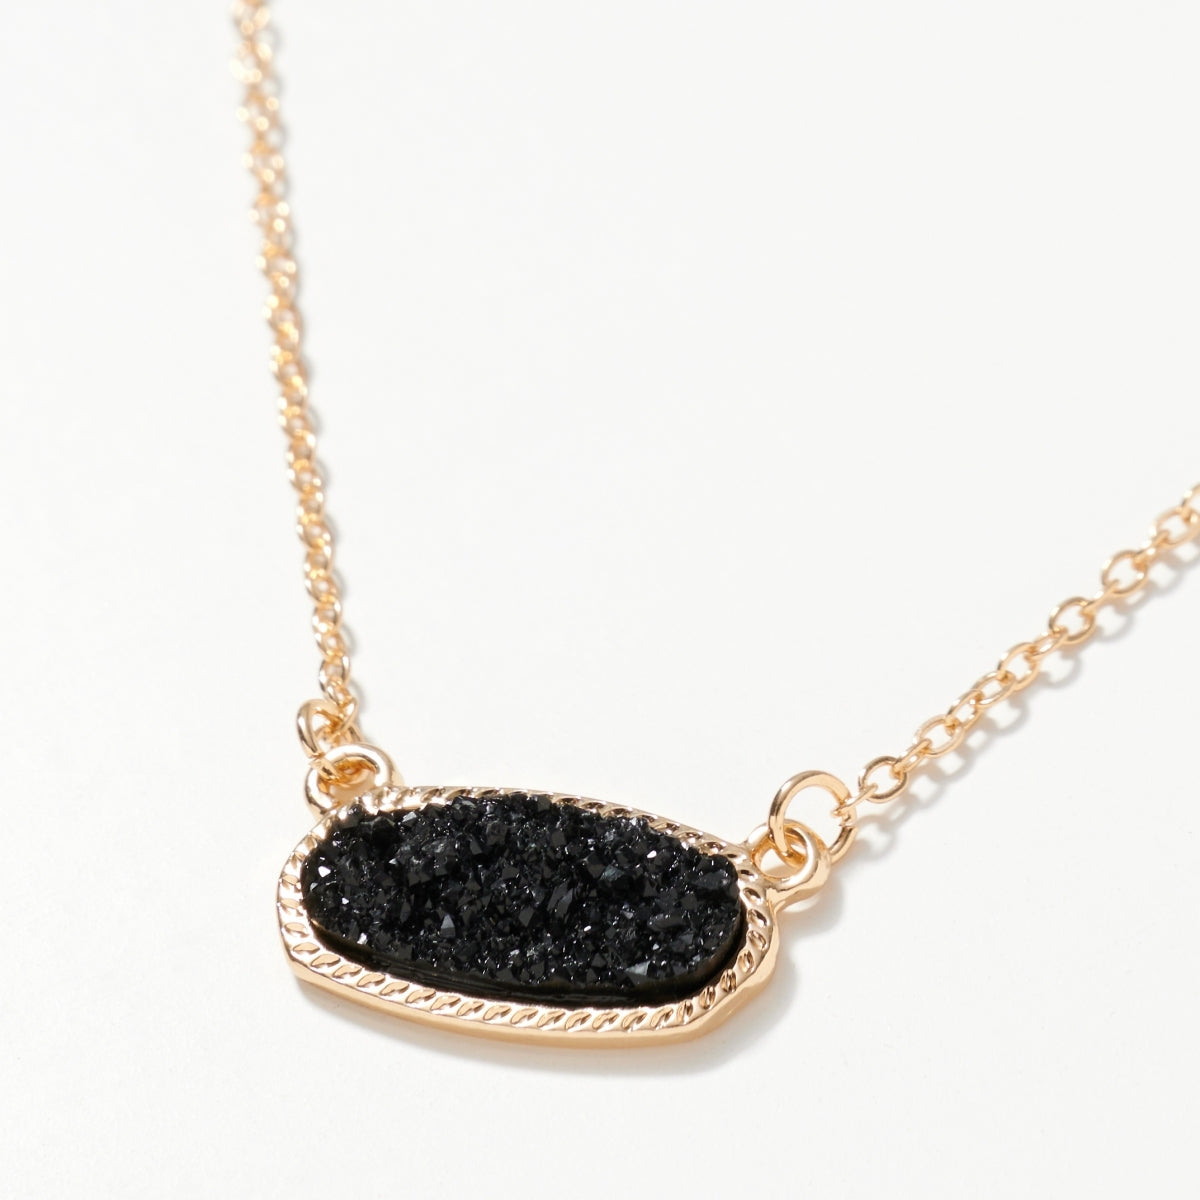 Dainty Oval Druzy Pendant Necklace & Earring Set - Black on Gold